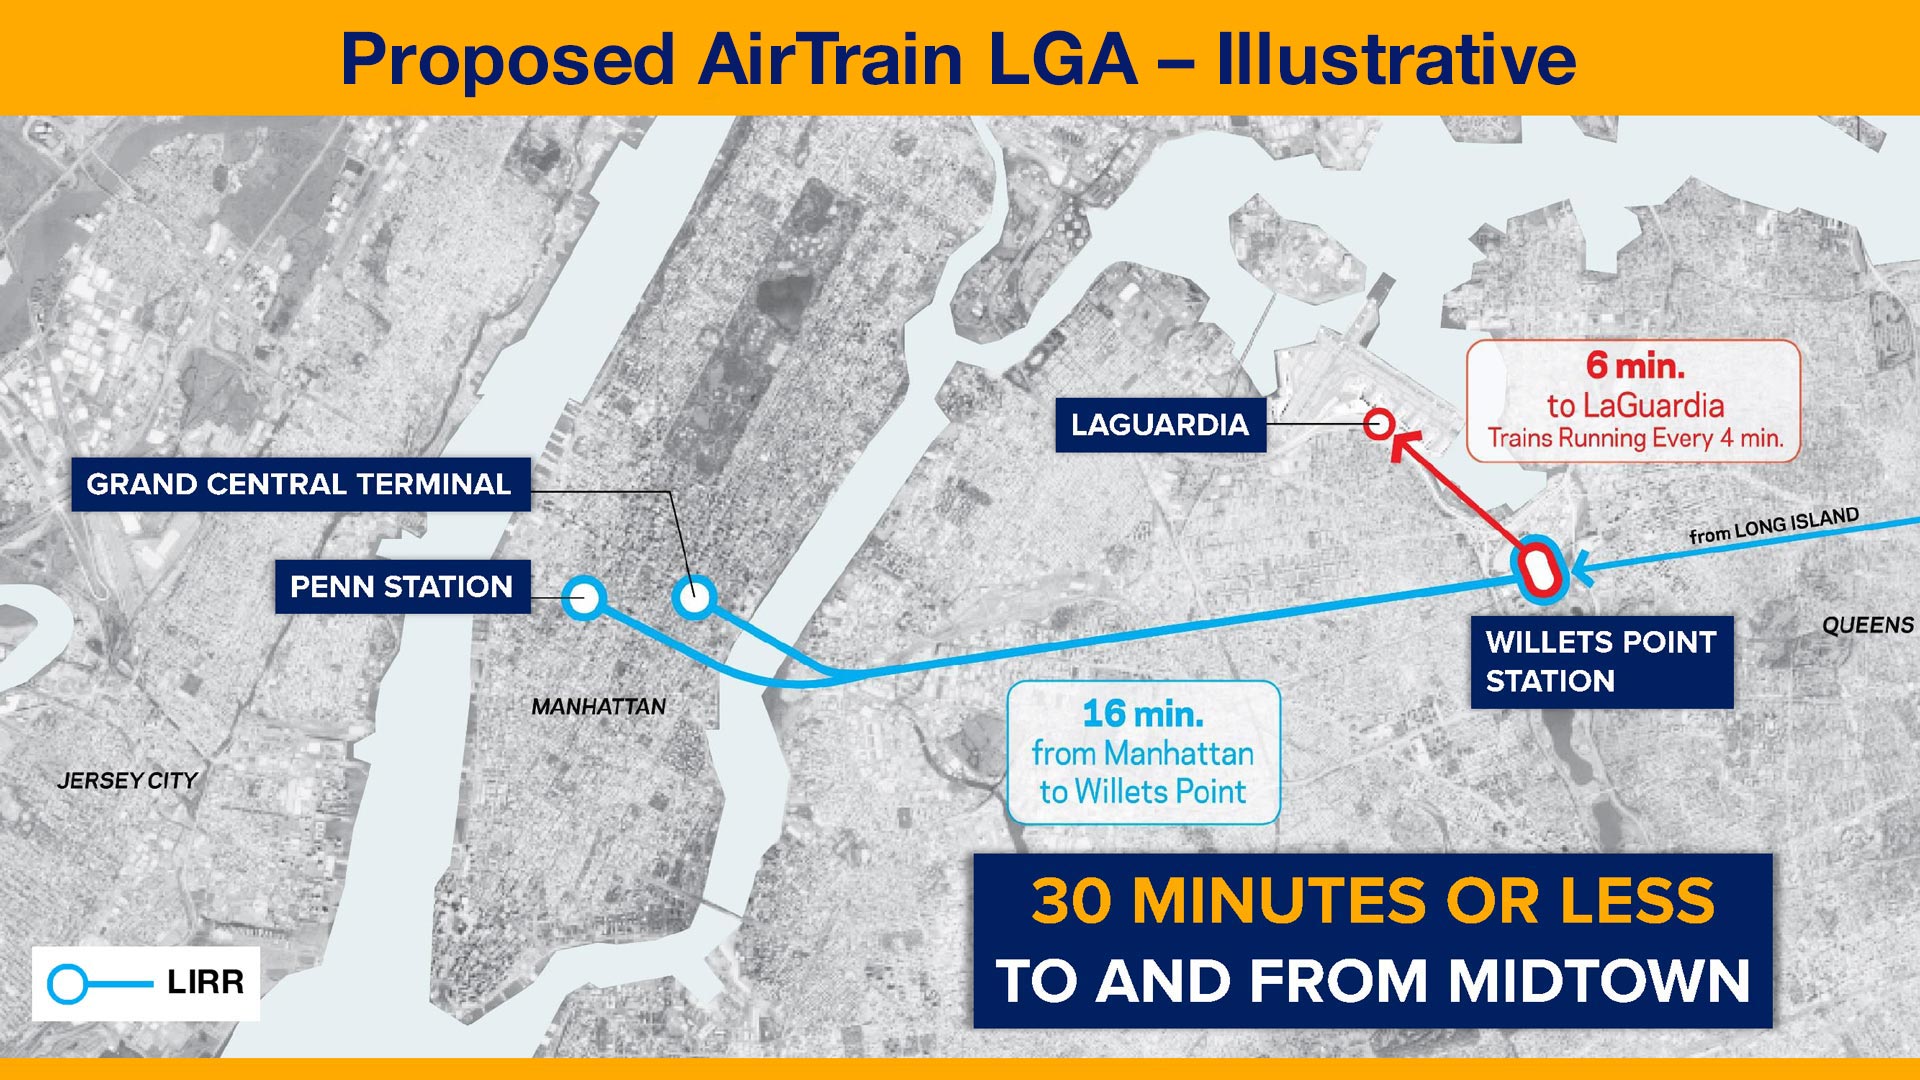 Proposed airtrain new lga illustrative need